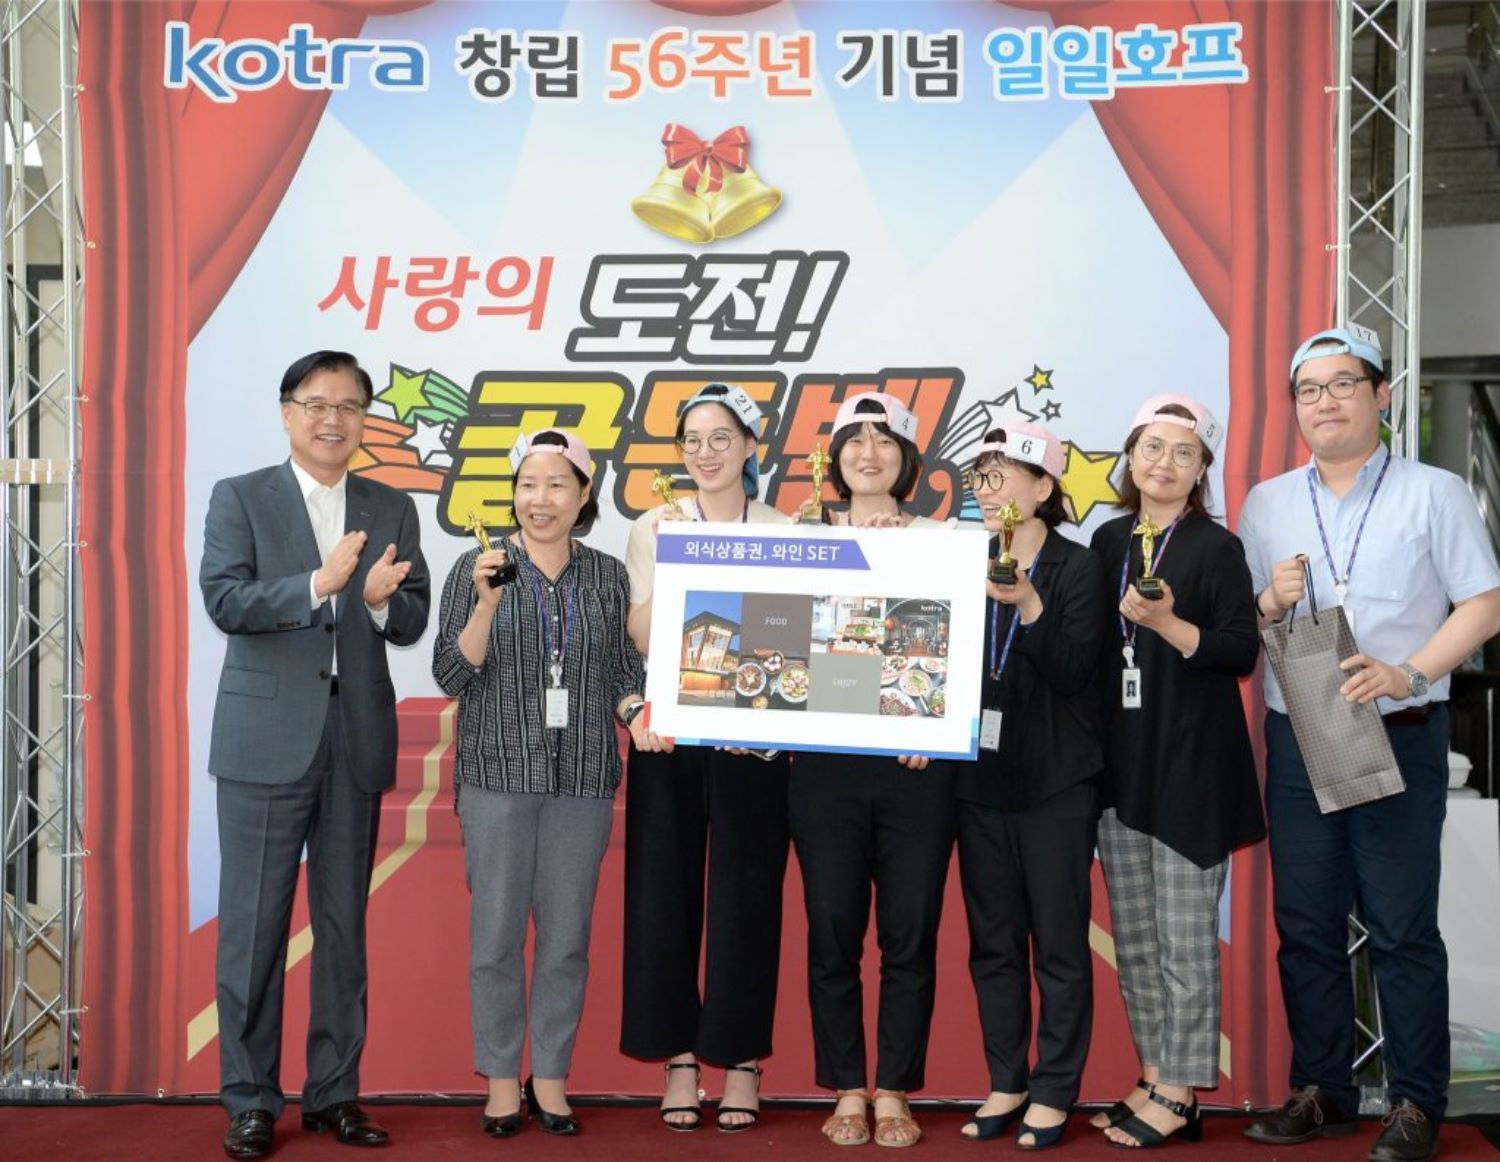 KOTRA (Korea Trade-Investment Promotion Agency)